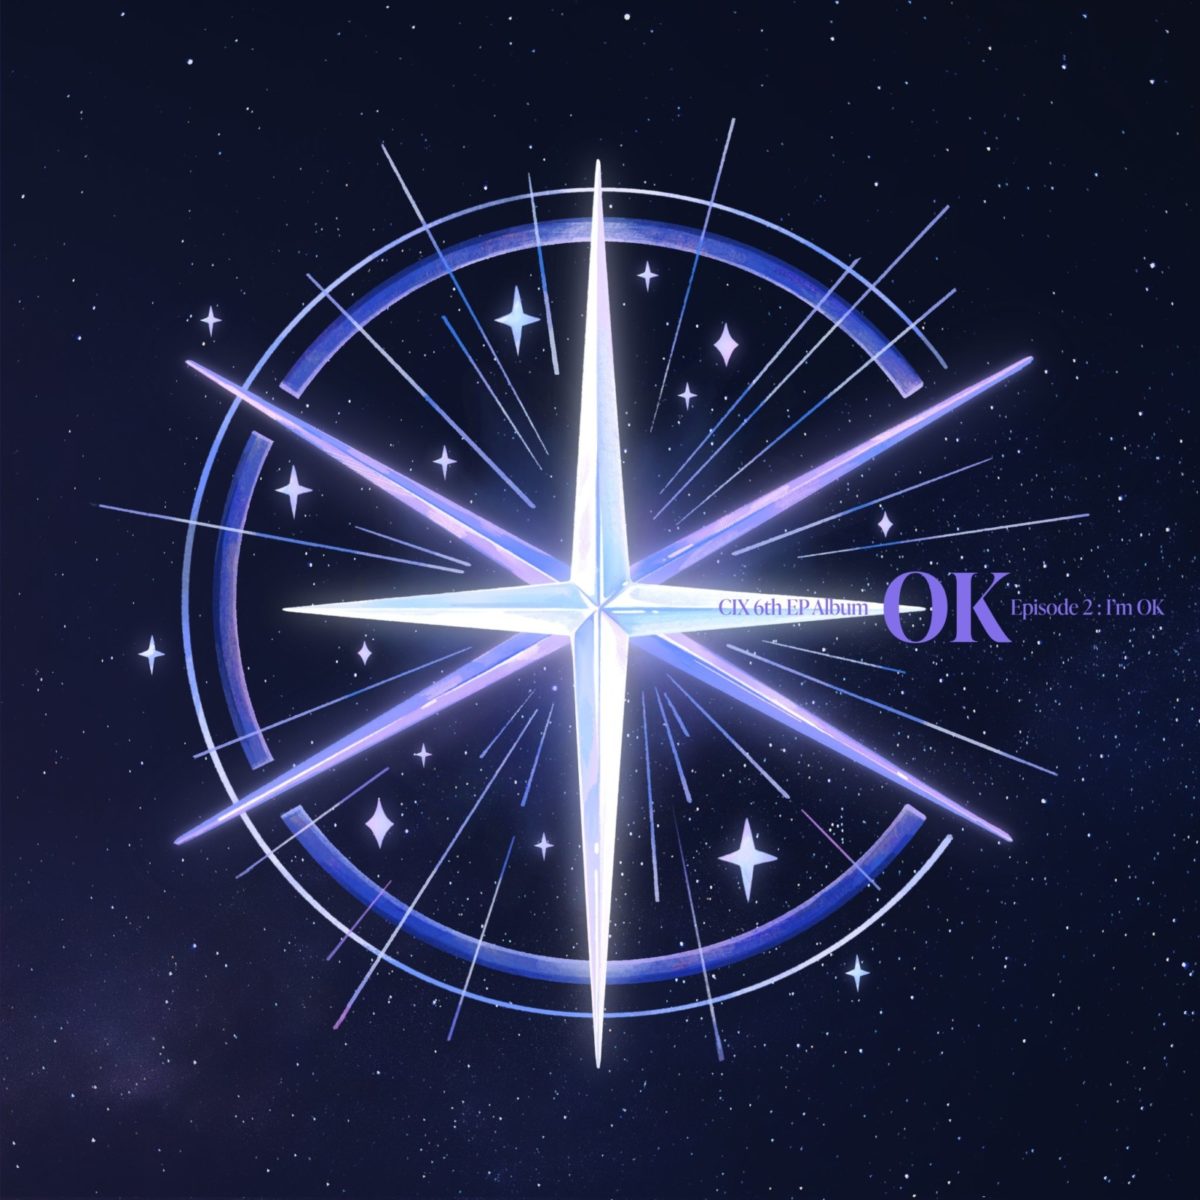 
CIX 6th EP Album  「'OK' Episode 2 : I'm OK」
CIX 「Save me, Kill me」


ビーエックス
BX

スンフン
SEUNGHUN

ベ・ジニョン
BAEJINYOUNG

ヨンヒ
YONGHEE

ヒョンソク
HYUNSUK